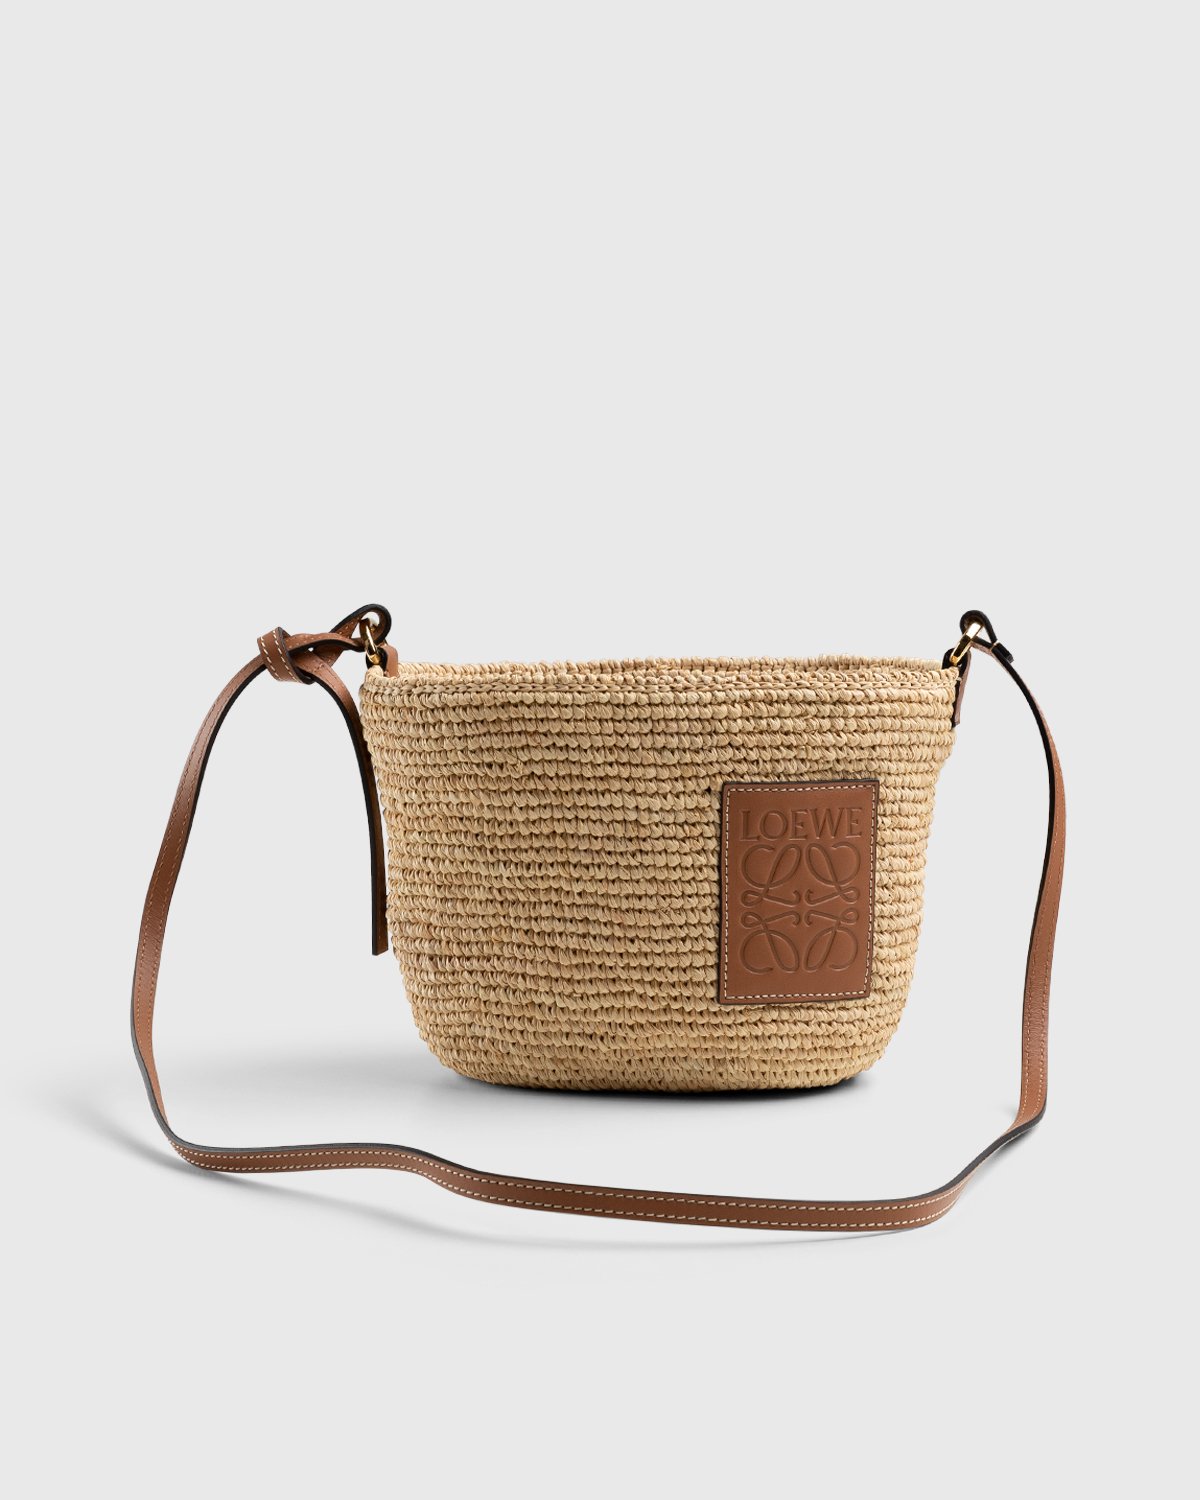 Loewe - Paula's Ibiza Pochette Anagram Basket Bag Natural/Tan - Accessories - Beige - Image 1